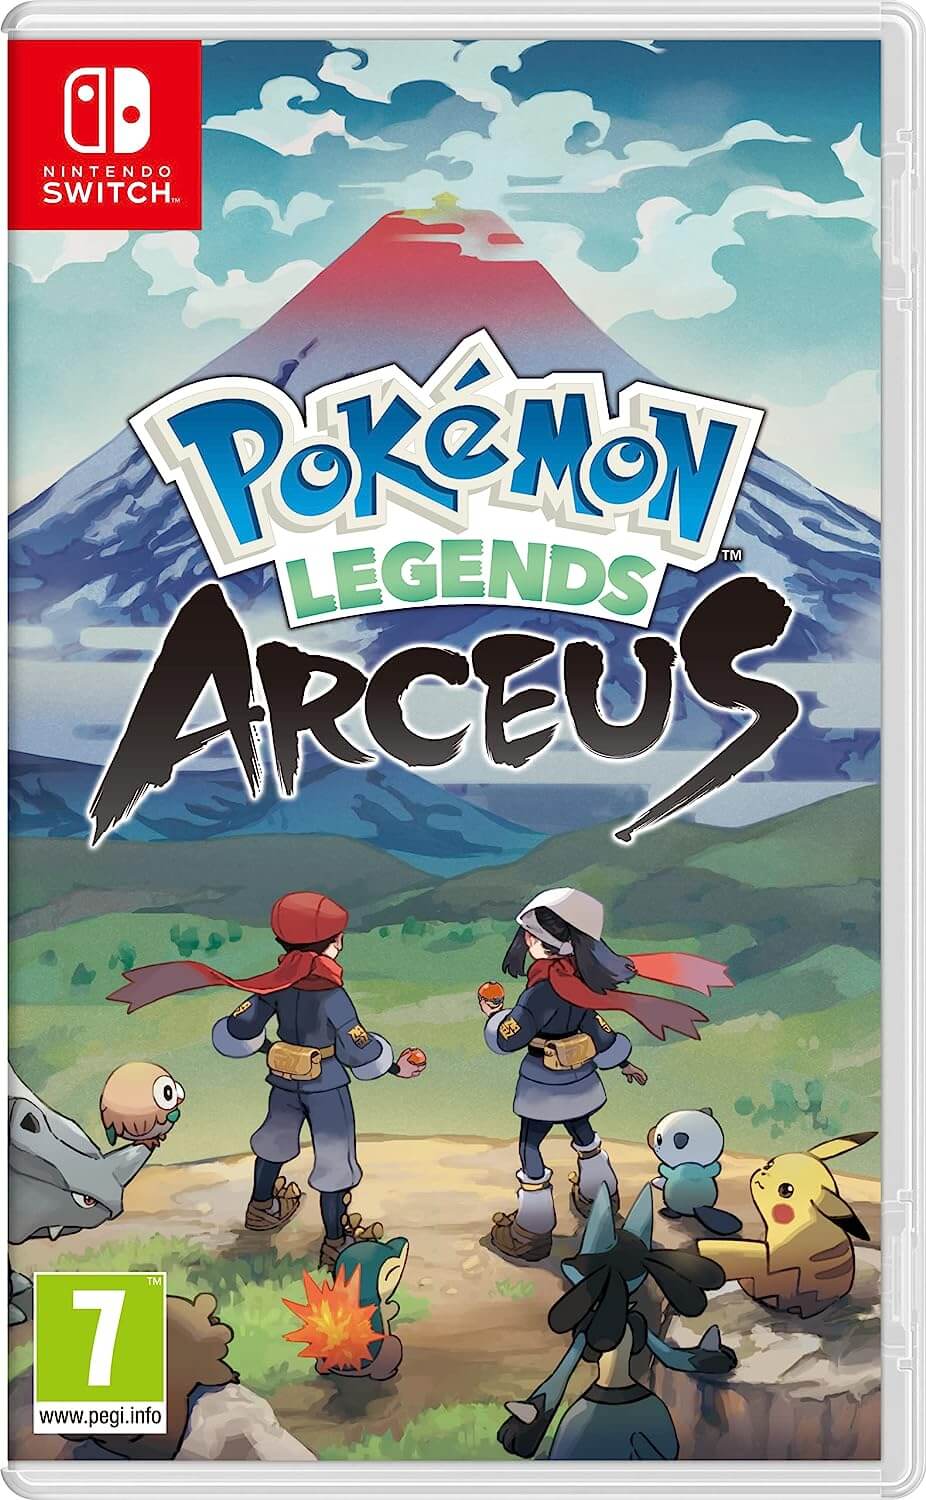 “Pokémon Legends: Arceus” (2022) on Nintendo Switch